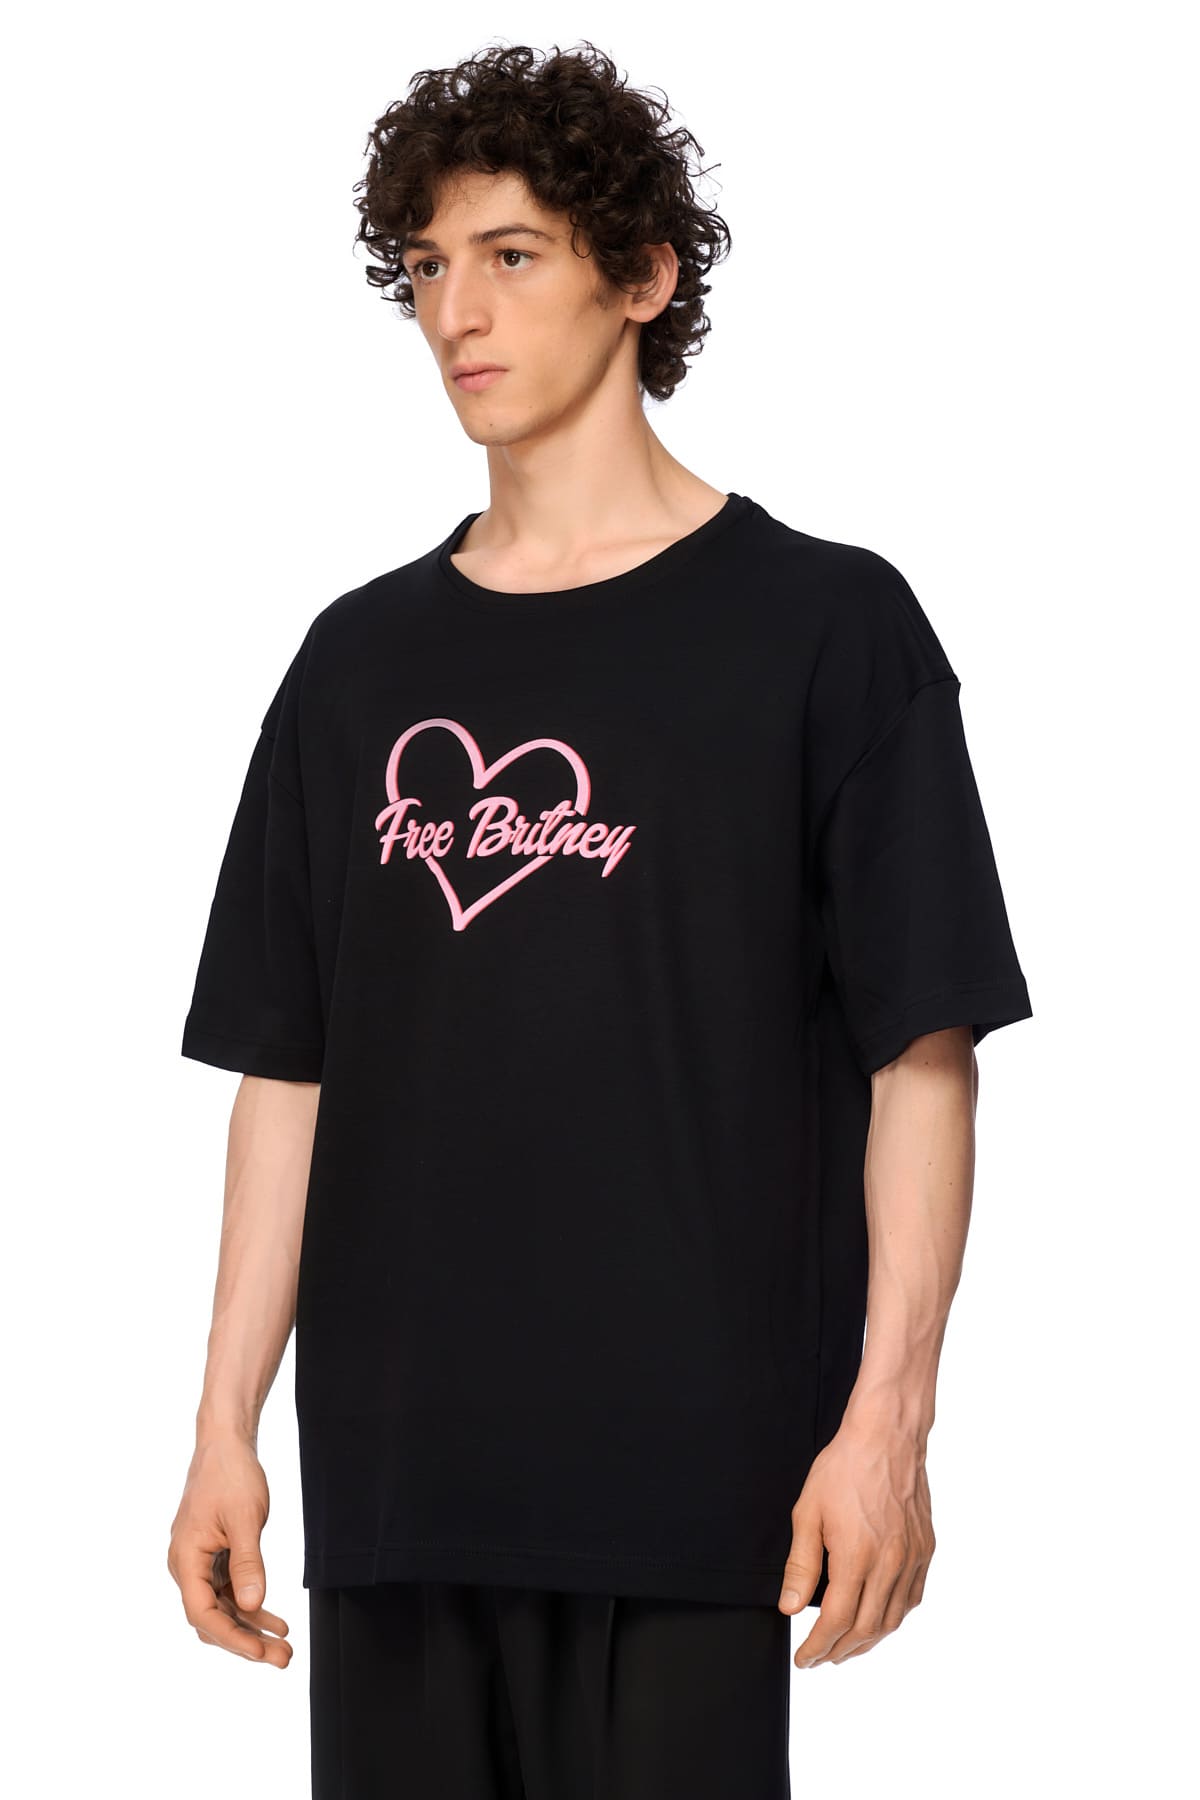 Free Britney T-shirt